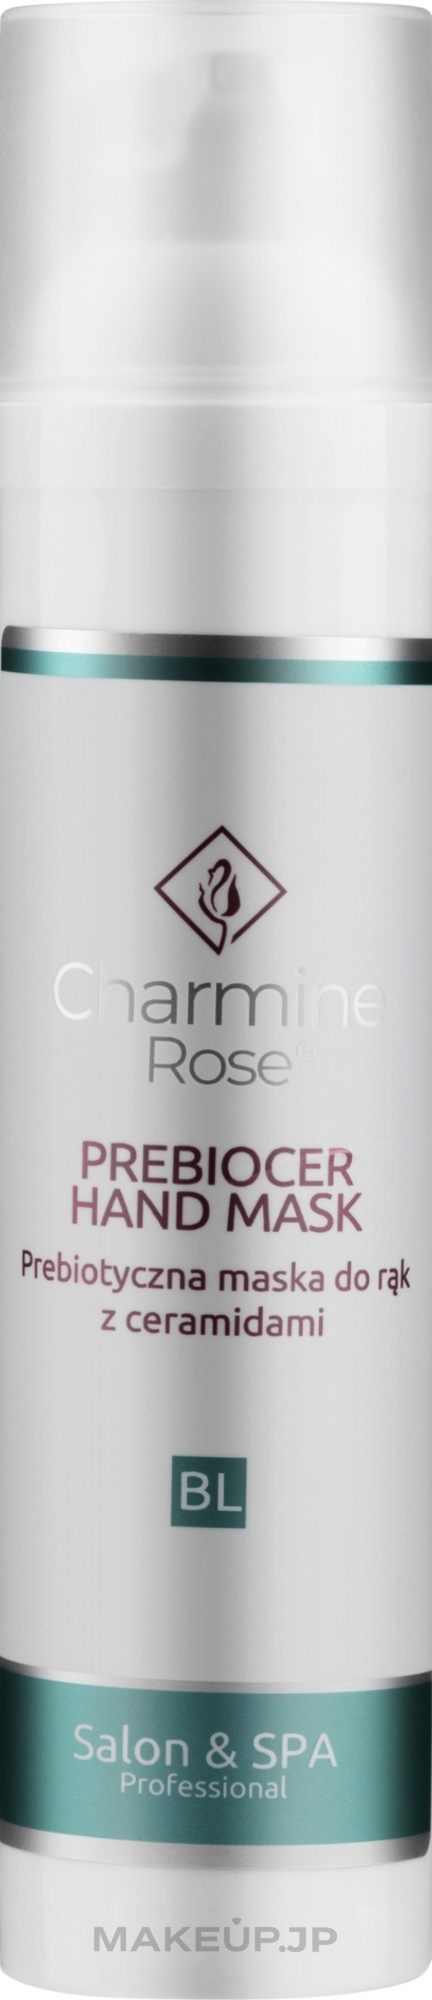 Hand Mask with Ceramides - Charmine Rose Prebiocer Hand Mask — photo 100 ml